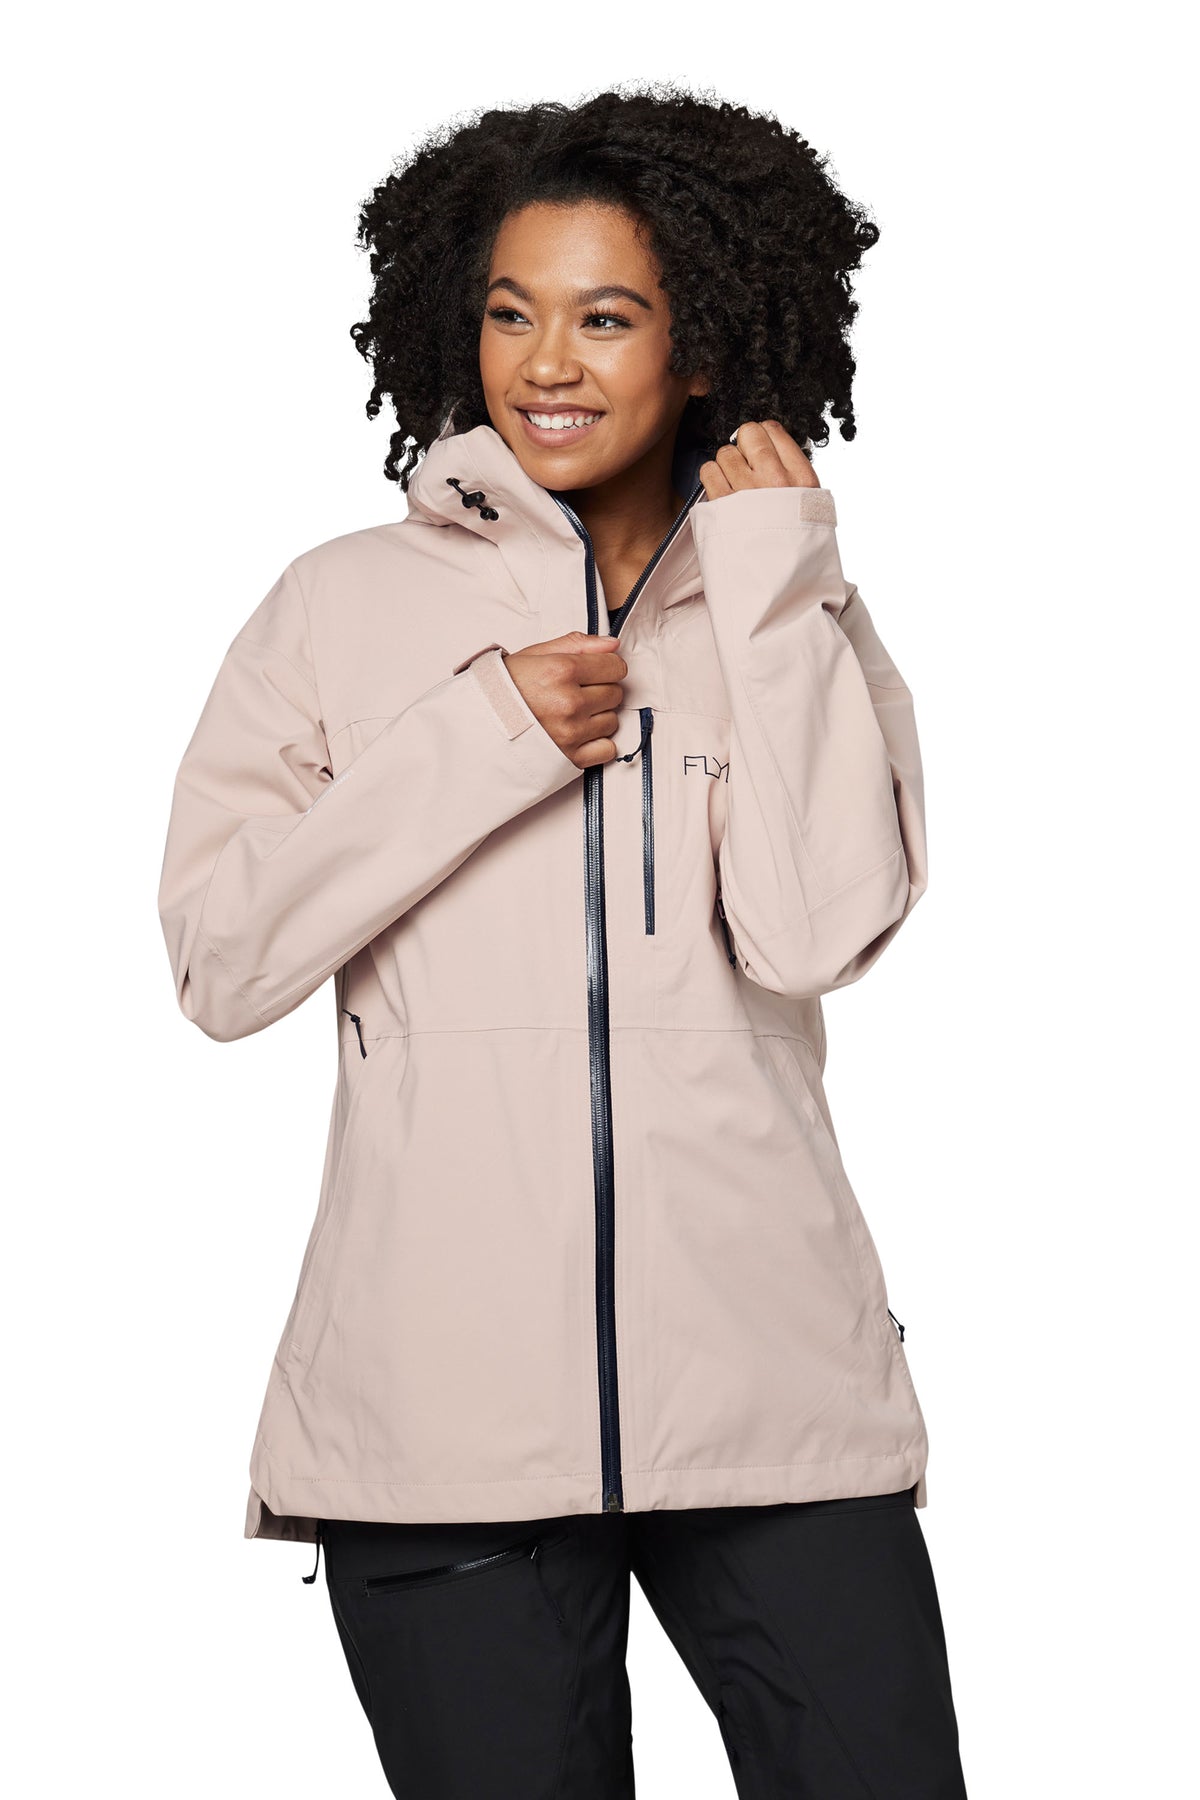 Diamond Candy Womens Rain Jacket Waterproof Winter Coat with Hood Wind